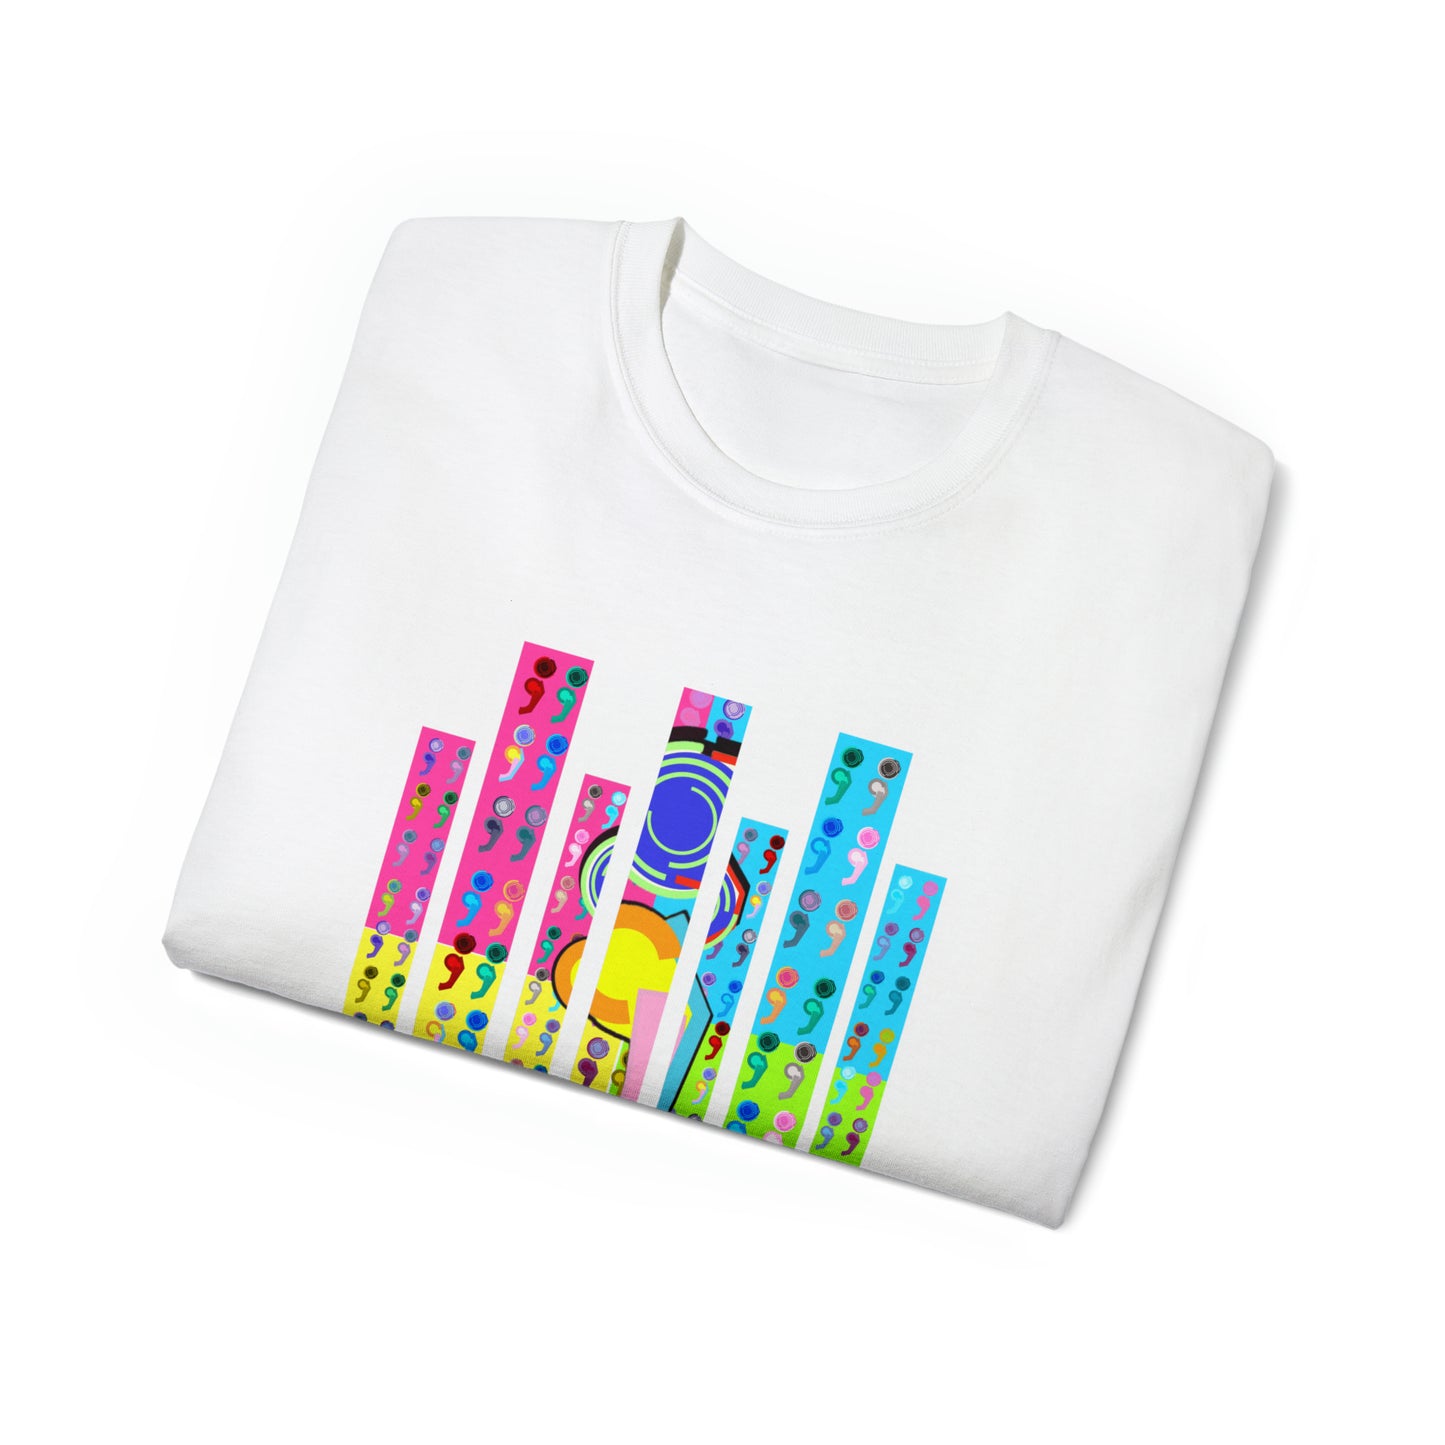 Semicolon Pop Art Unisex T-shirt